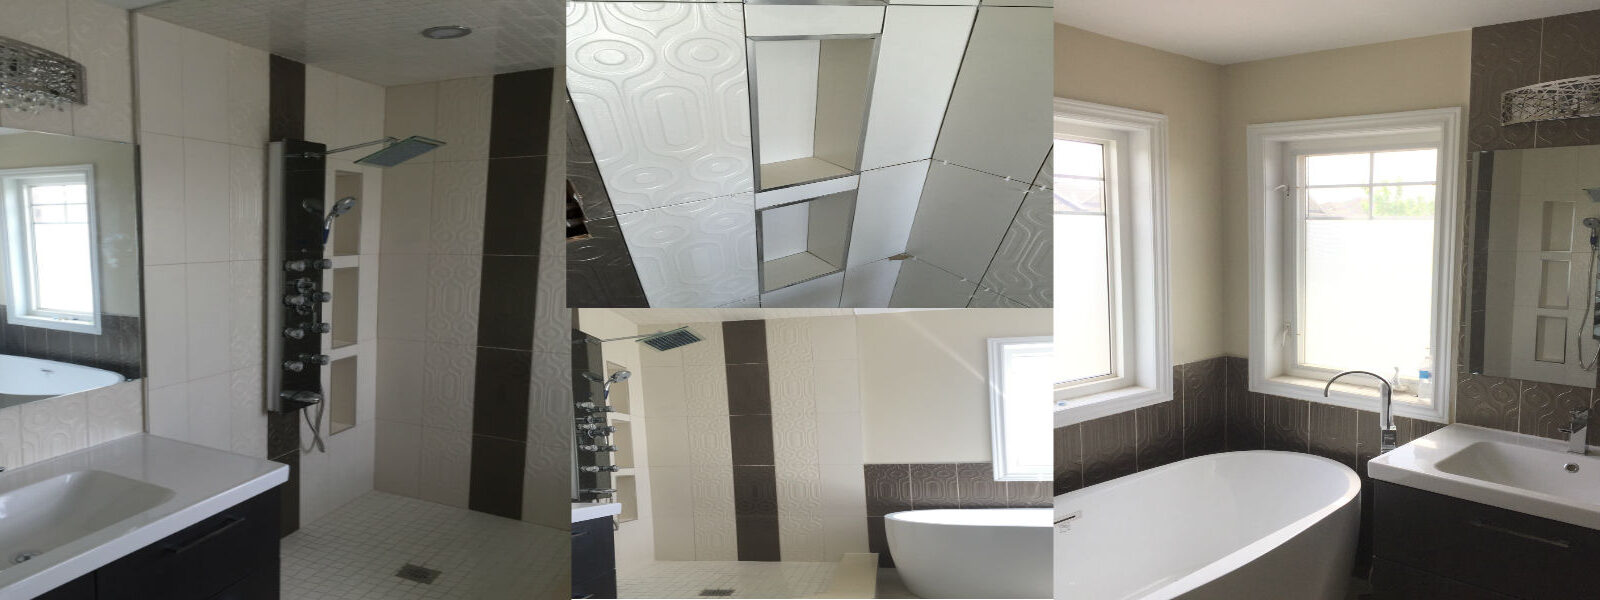 bathroom renovations & remodeling in Toronto